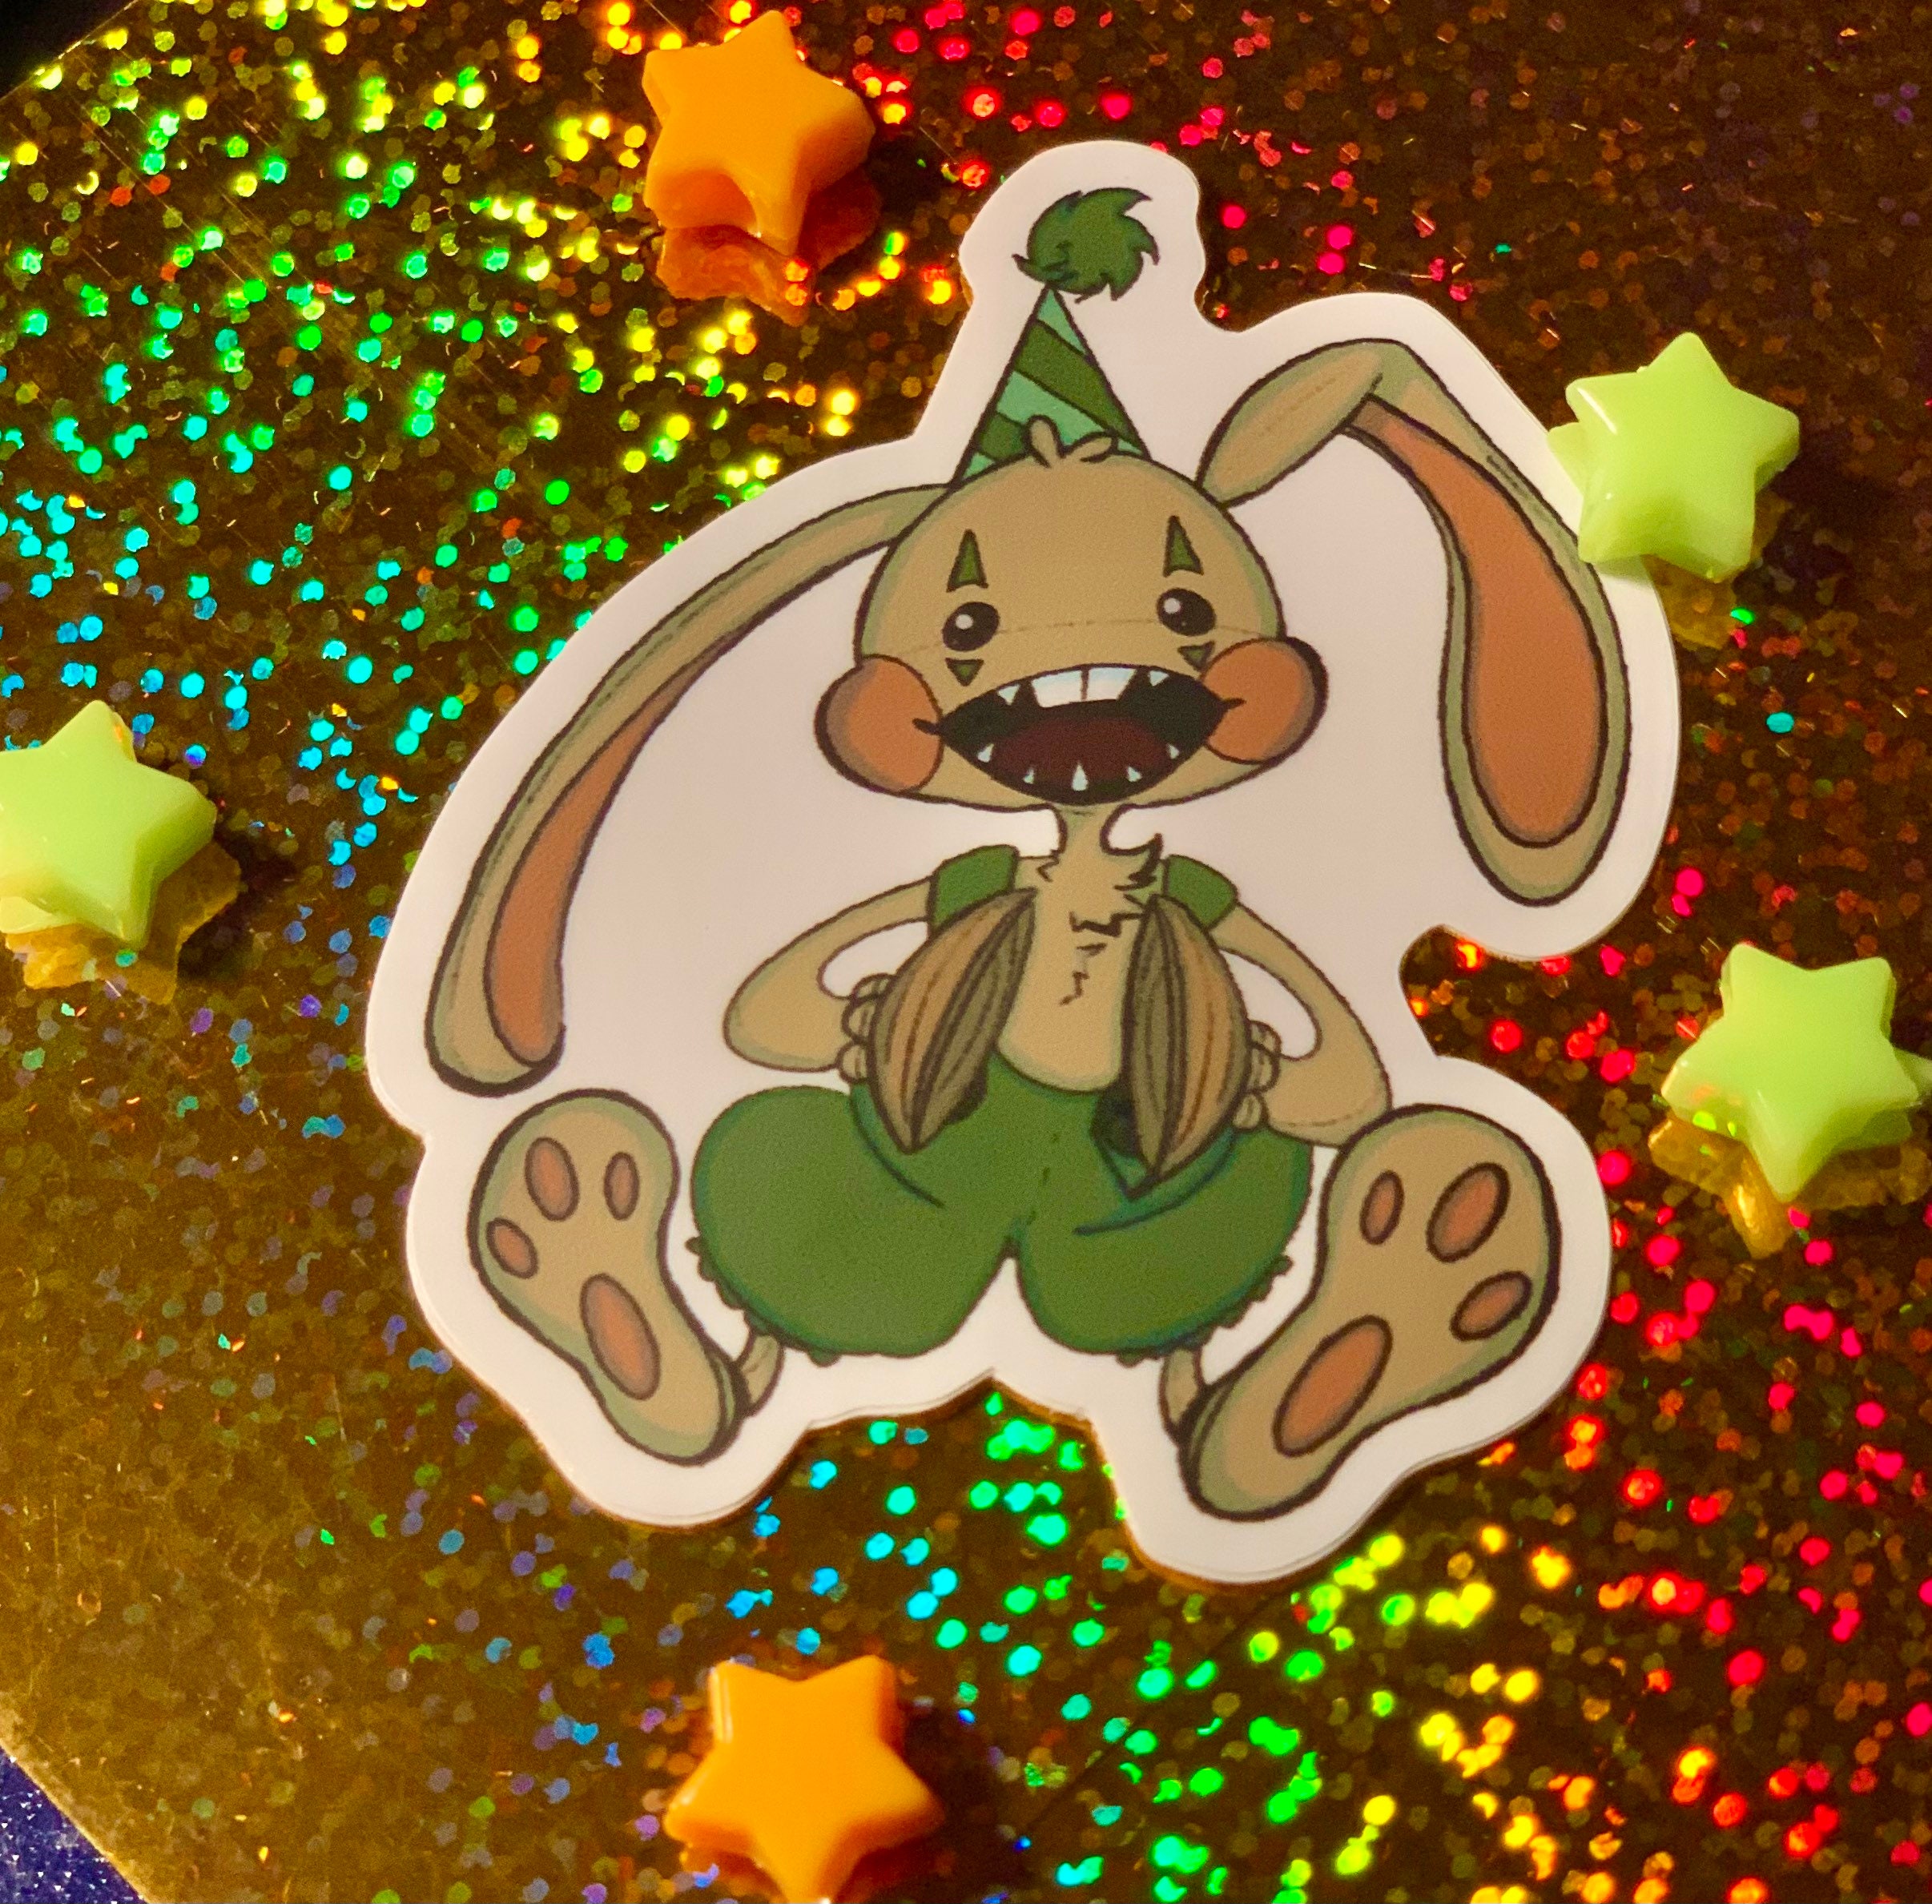 Bunzo Bunny Poppy Playtime Huggy wuggy toy Bunzo Bunny Plush - Shop Skazka  Kids' Toys - Pinkoi